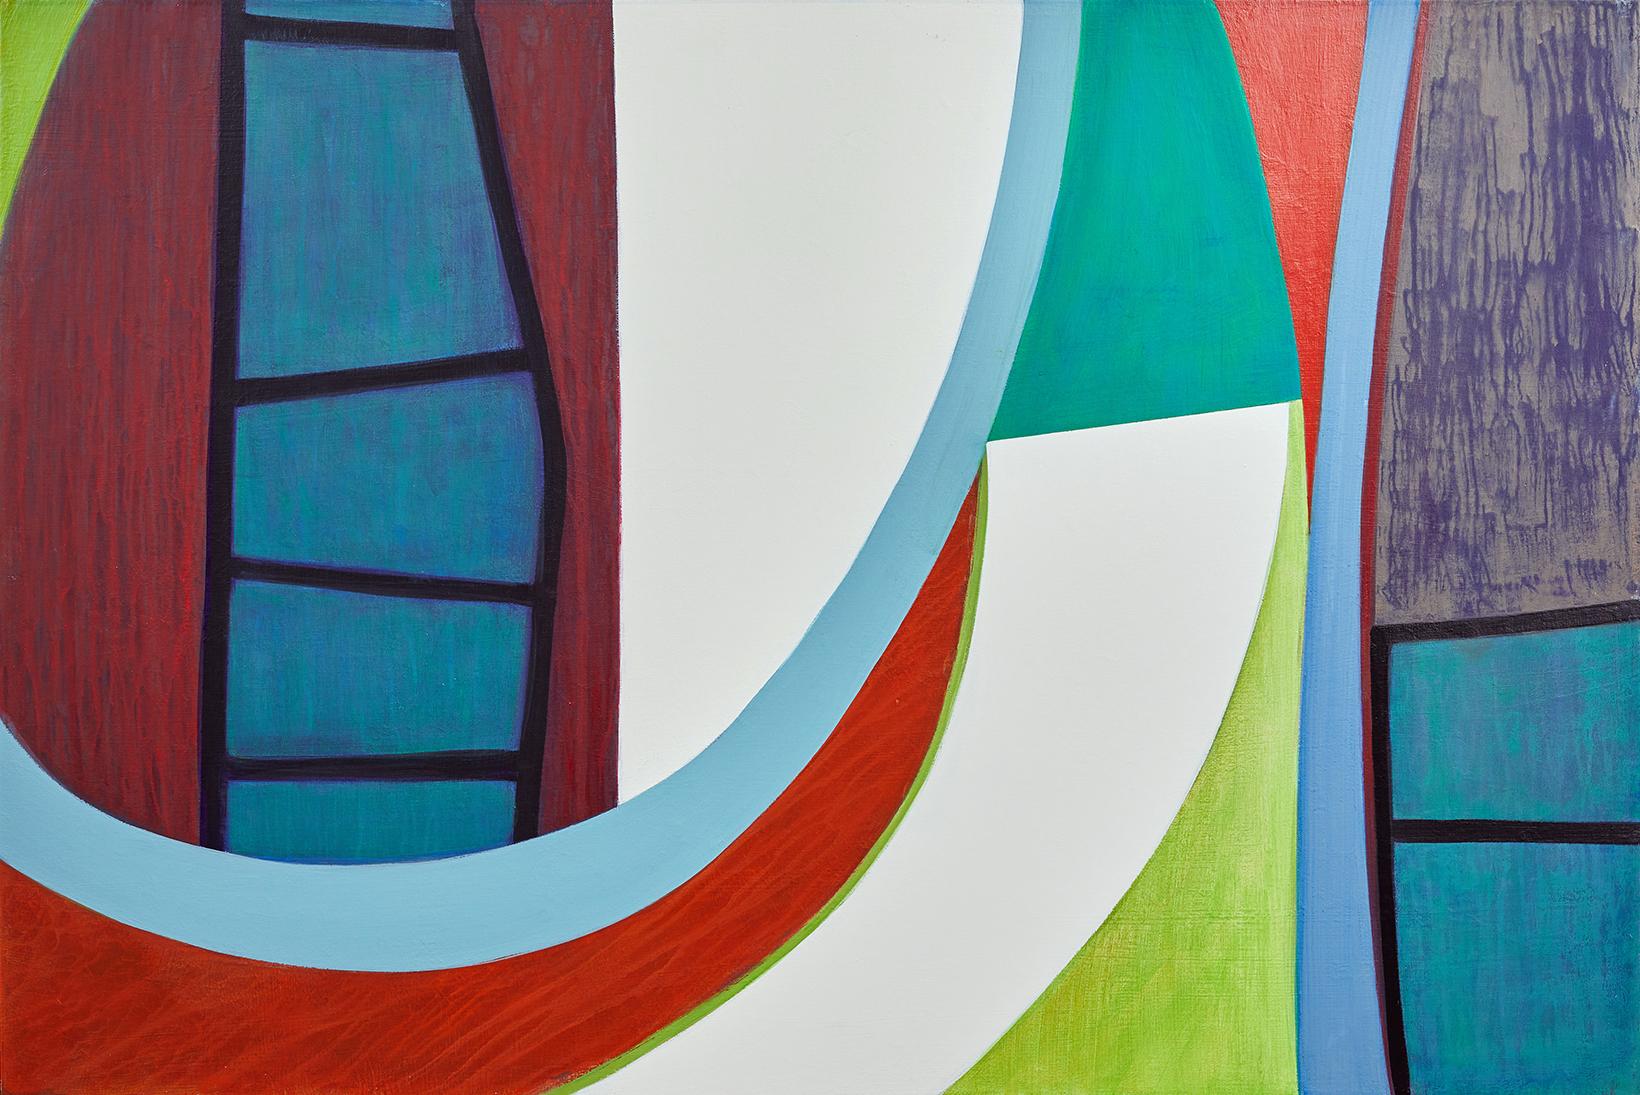 Abstract Painting Liane Ricci - Chutes and Ladders, peinture abstraite multicolore sur panneau